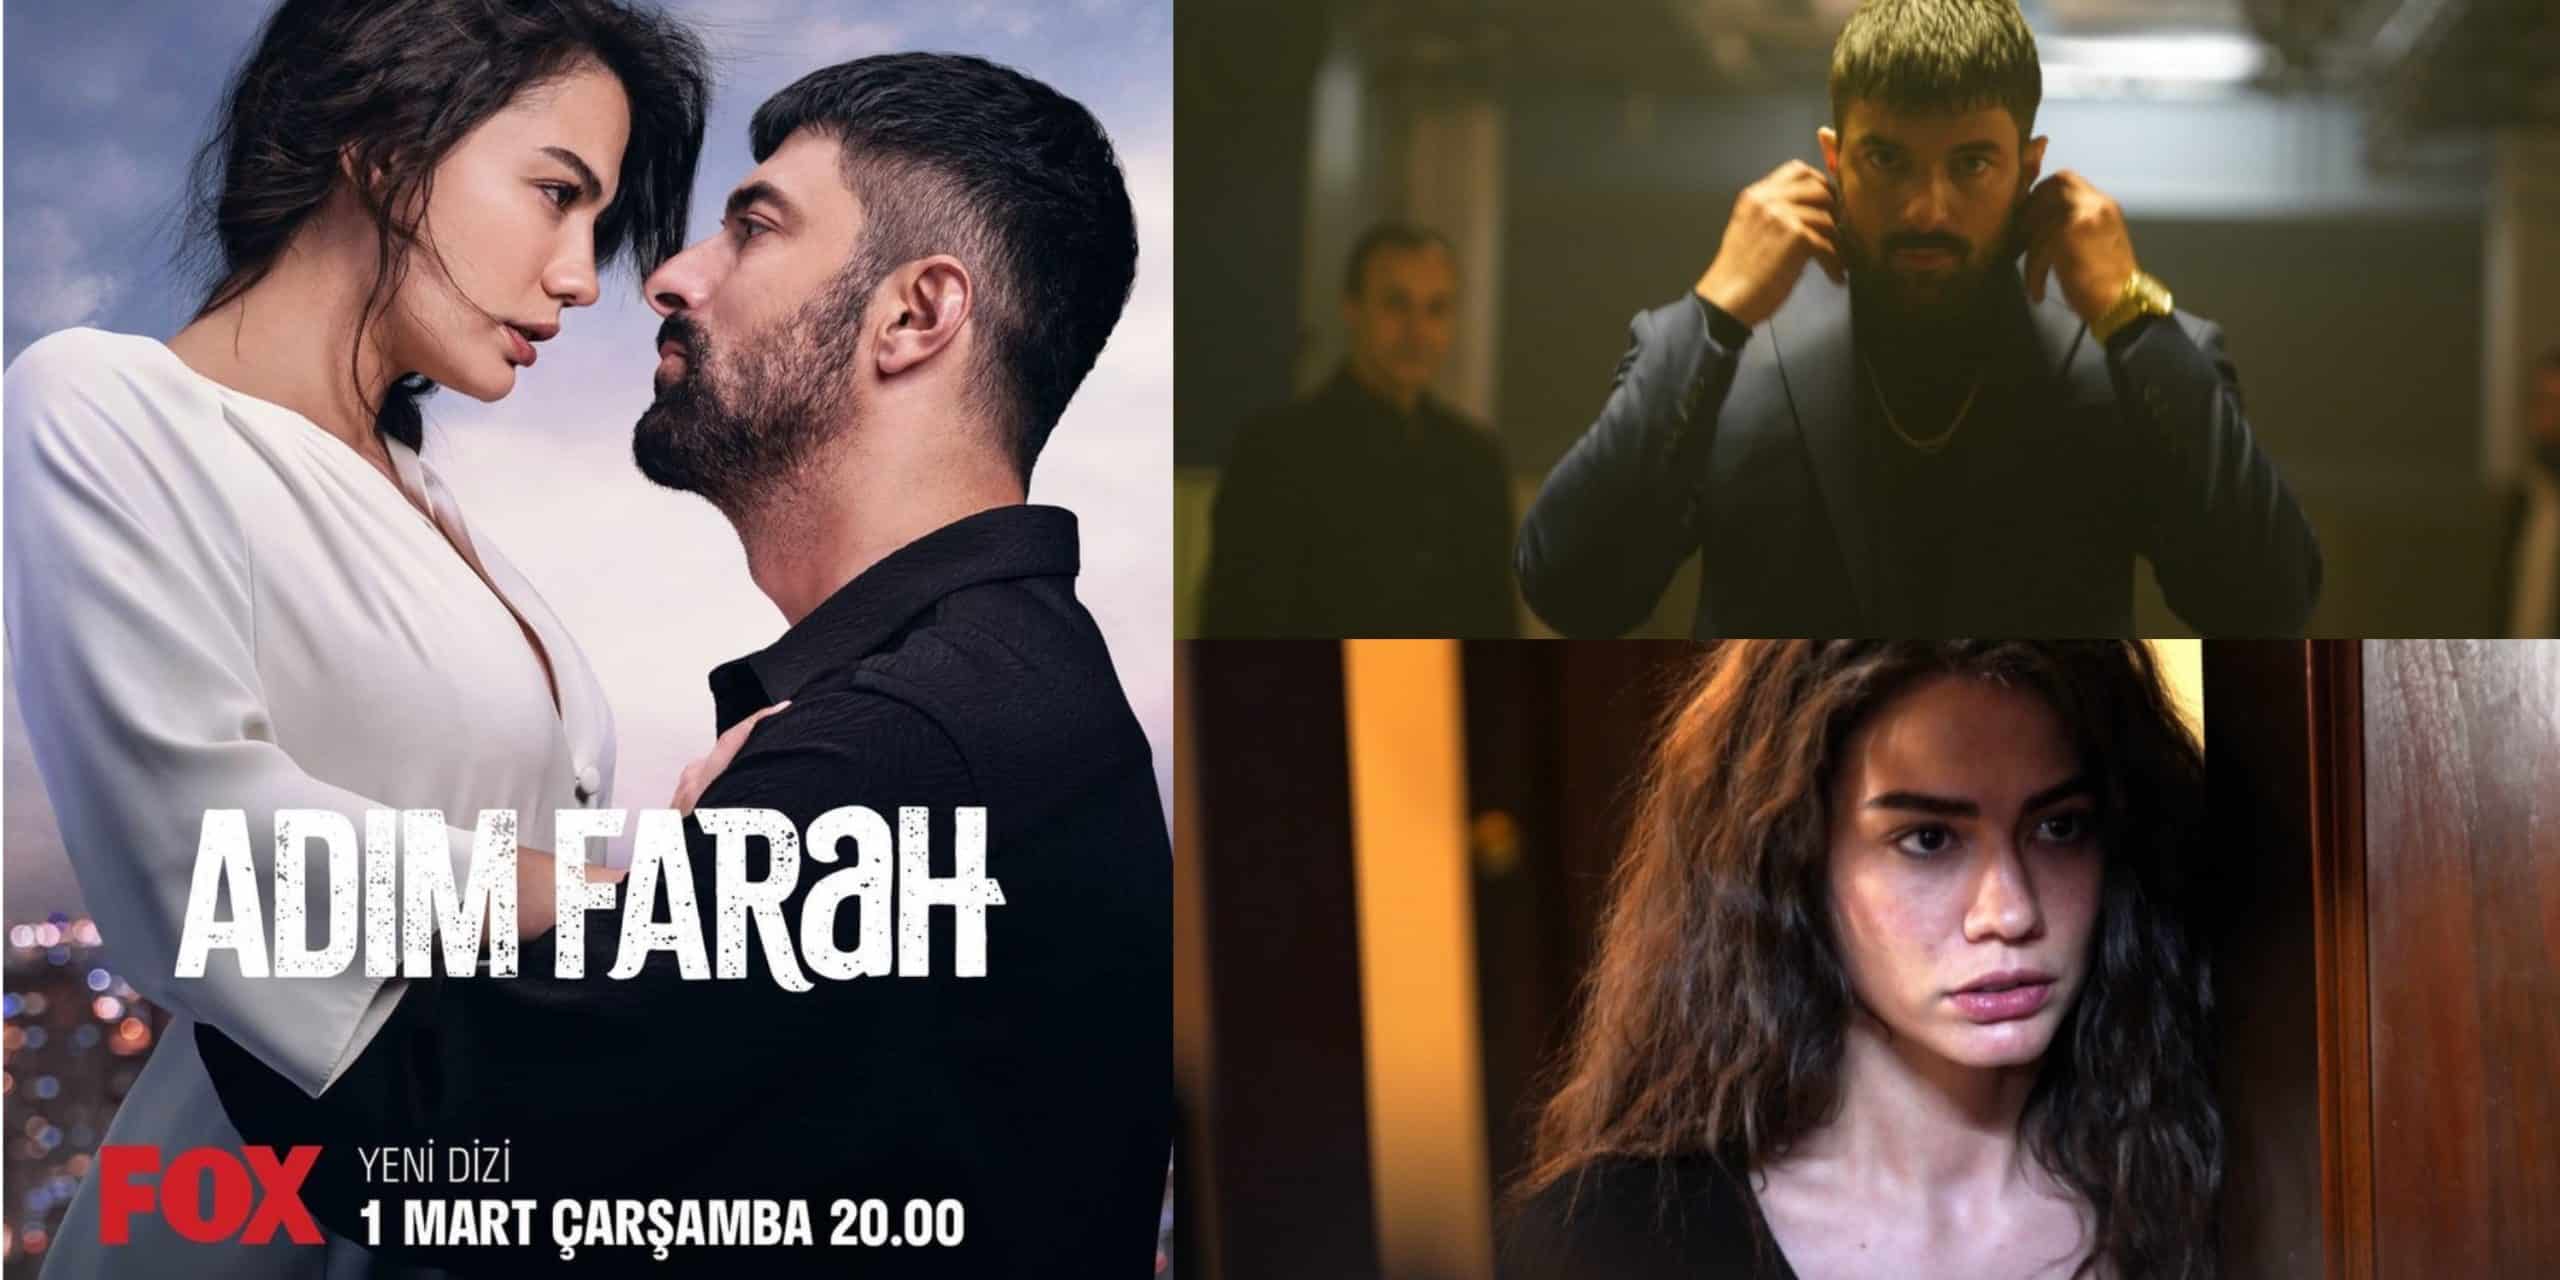 Benim Adim Farah Turkish Romance Series Episode 5 Release Date